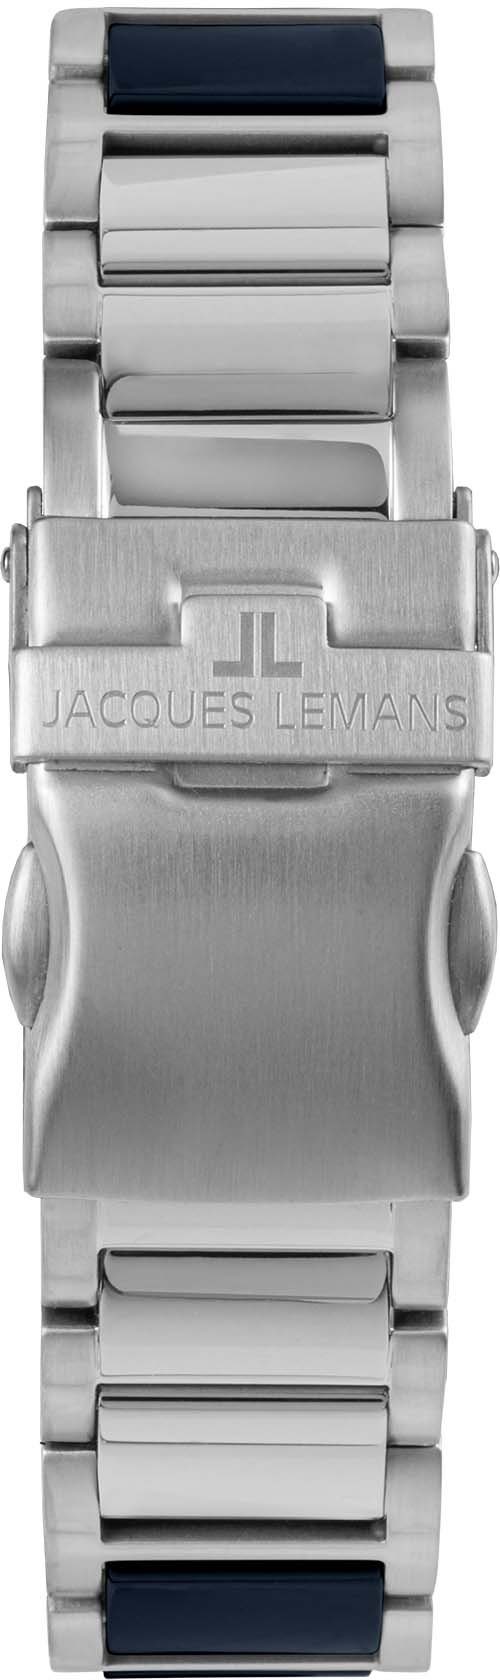 Jacques Lemans Keramikuhr 42-10B Liverpool